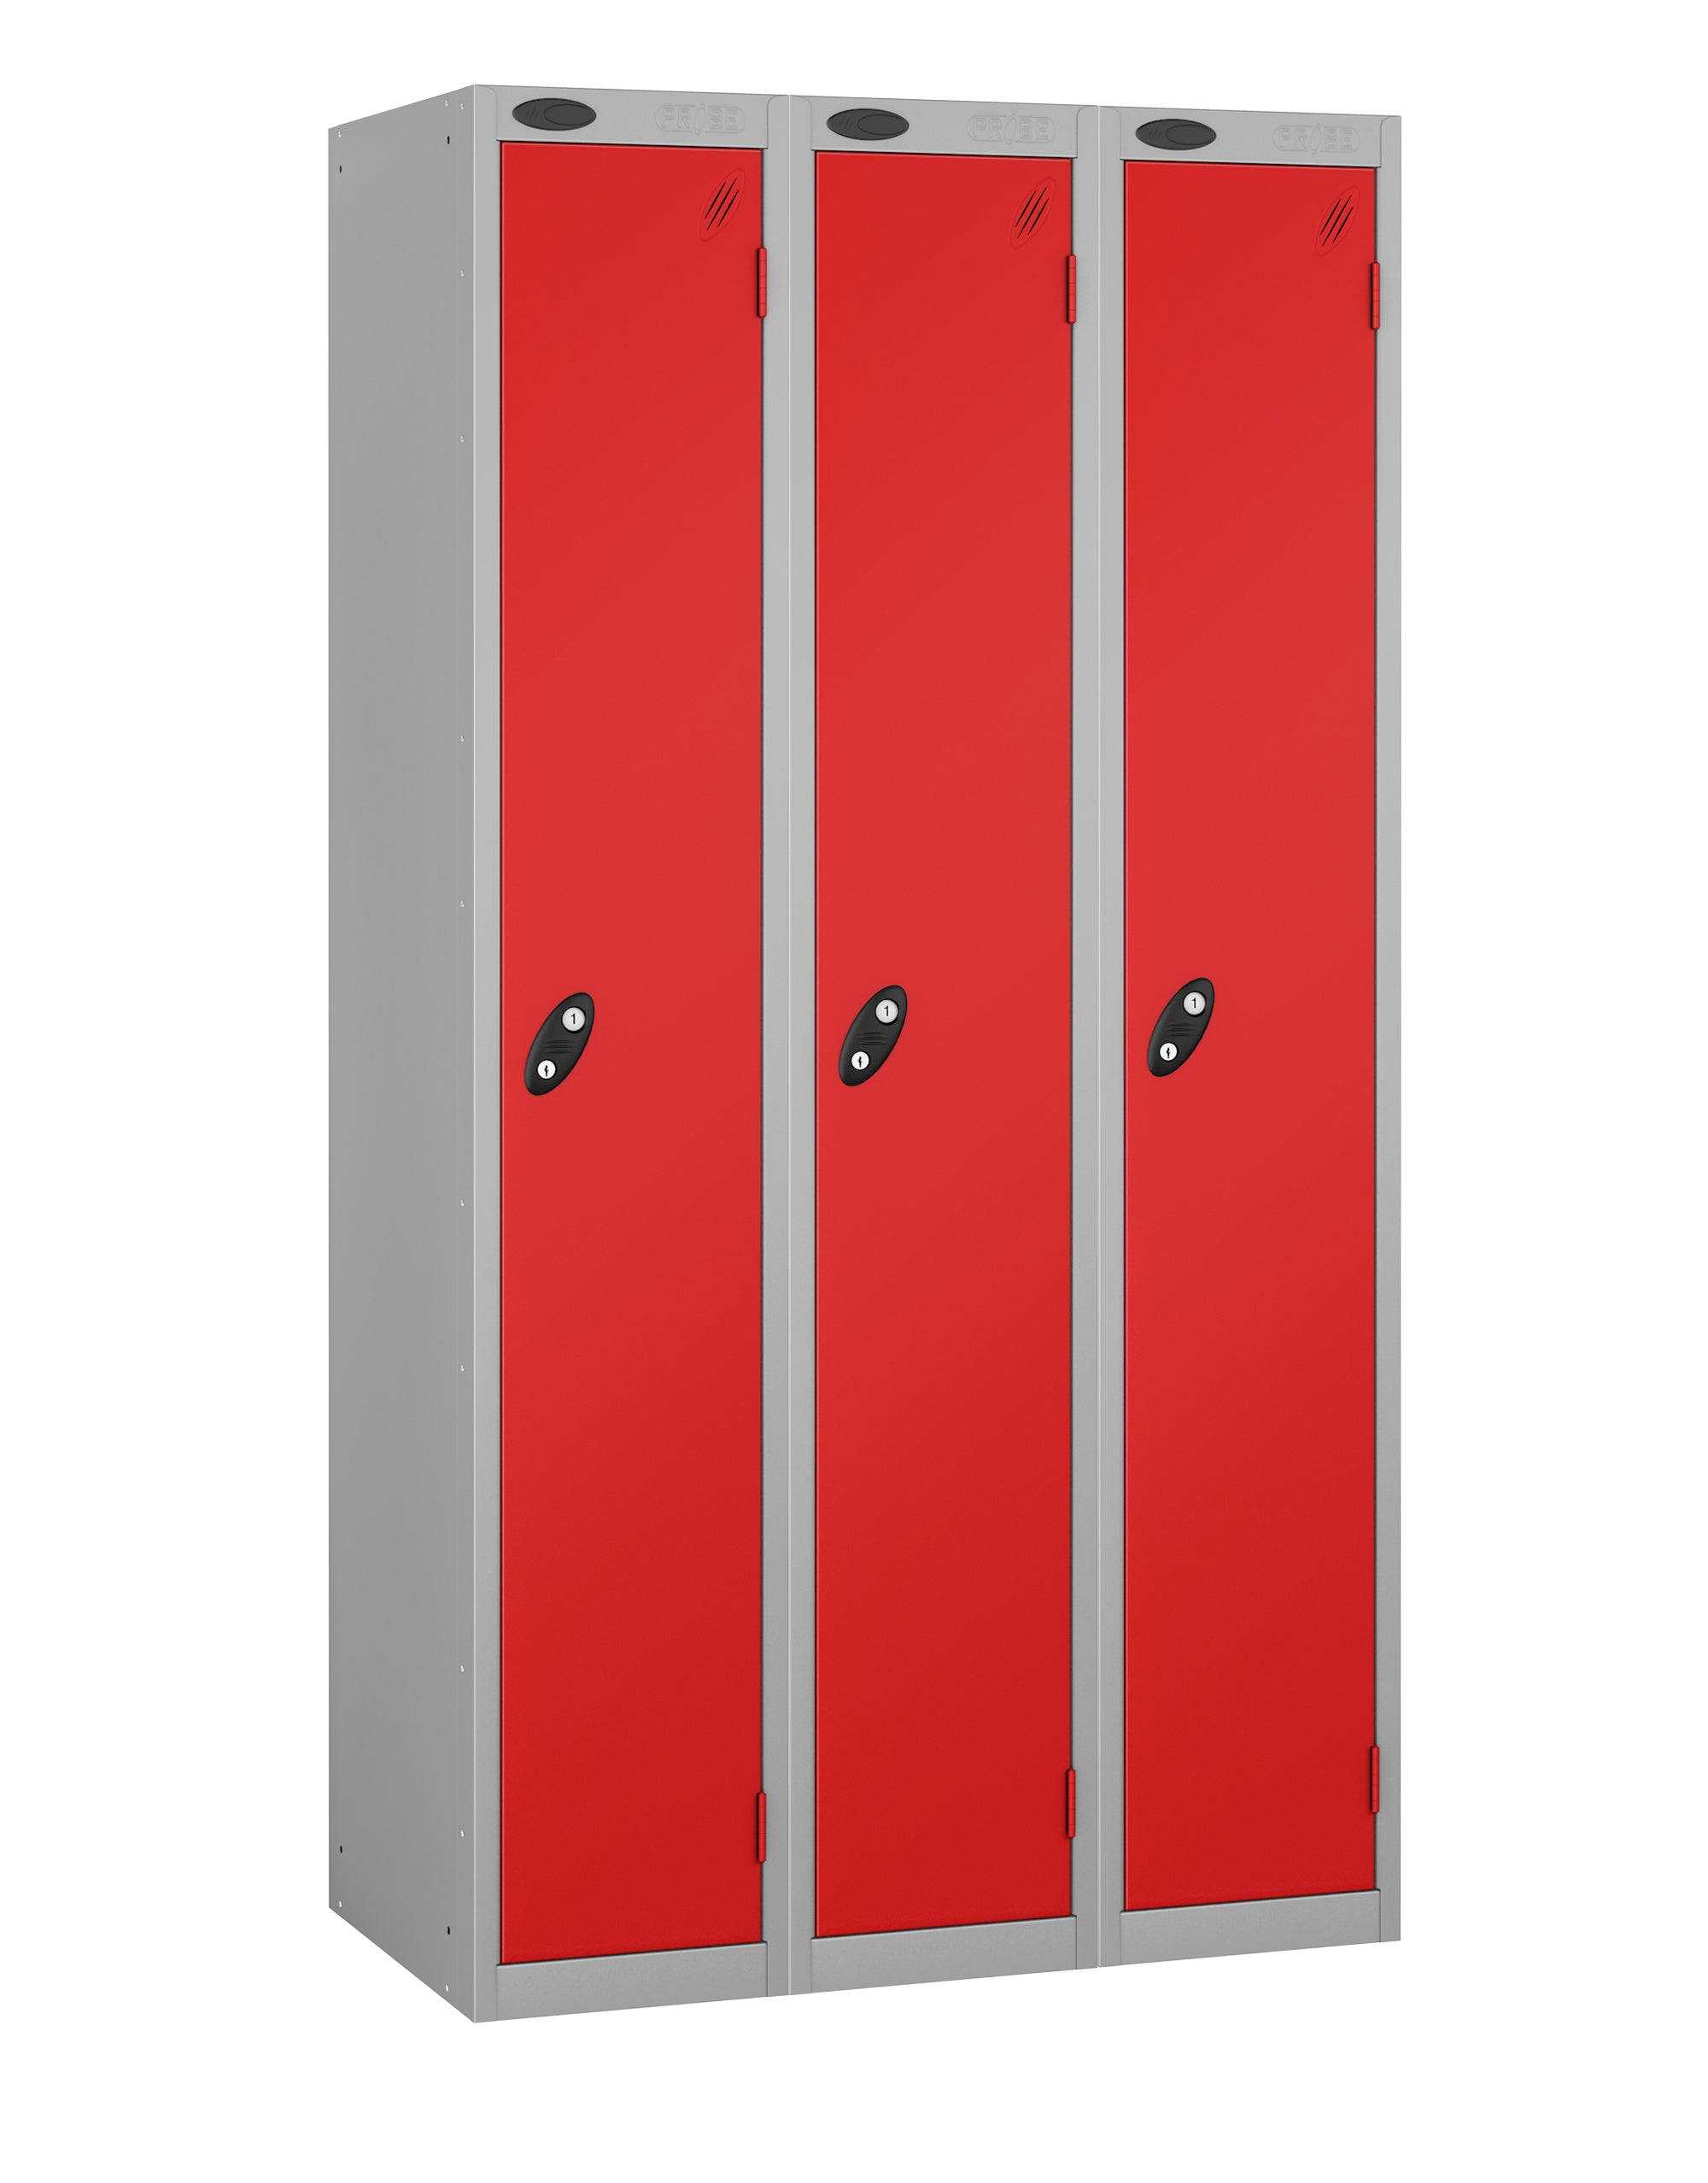 PROBEBOX STANDARD 3 NEST STEEL LOCKERS - FLAME RED 1 DOOR Storage Lockers > Lockers > Cabinets > Storage > Probe > One Stop For Safety   